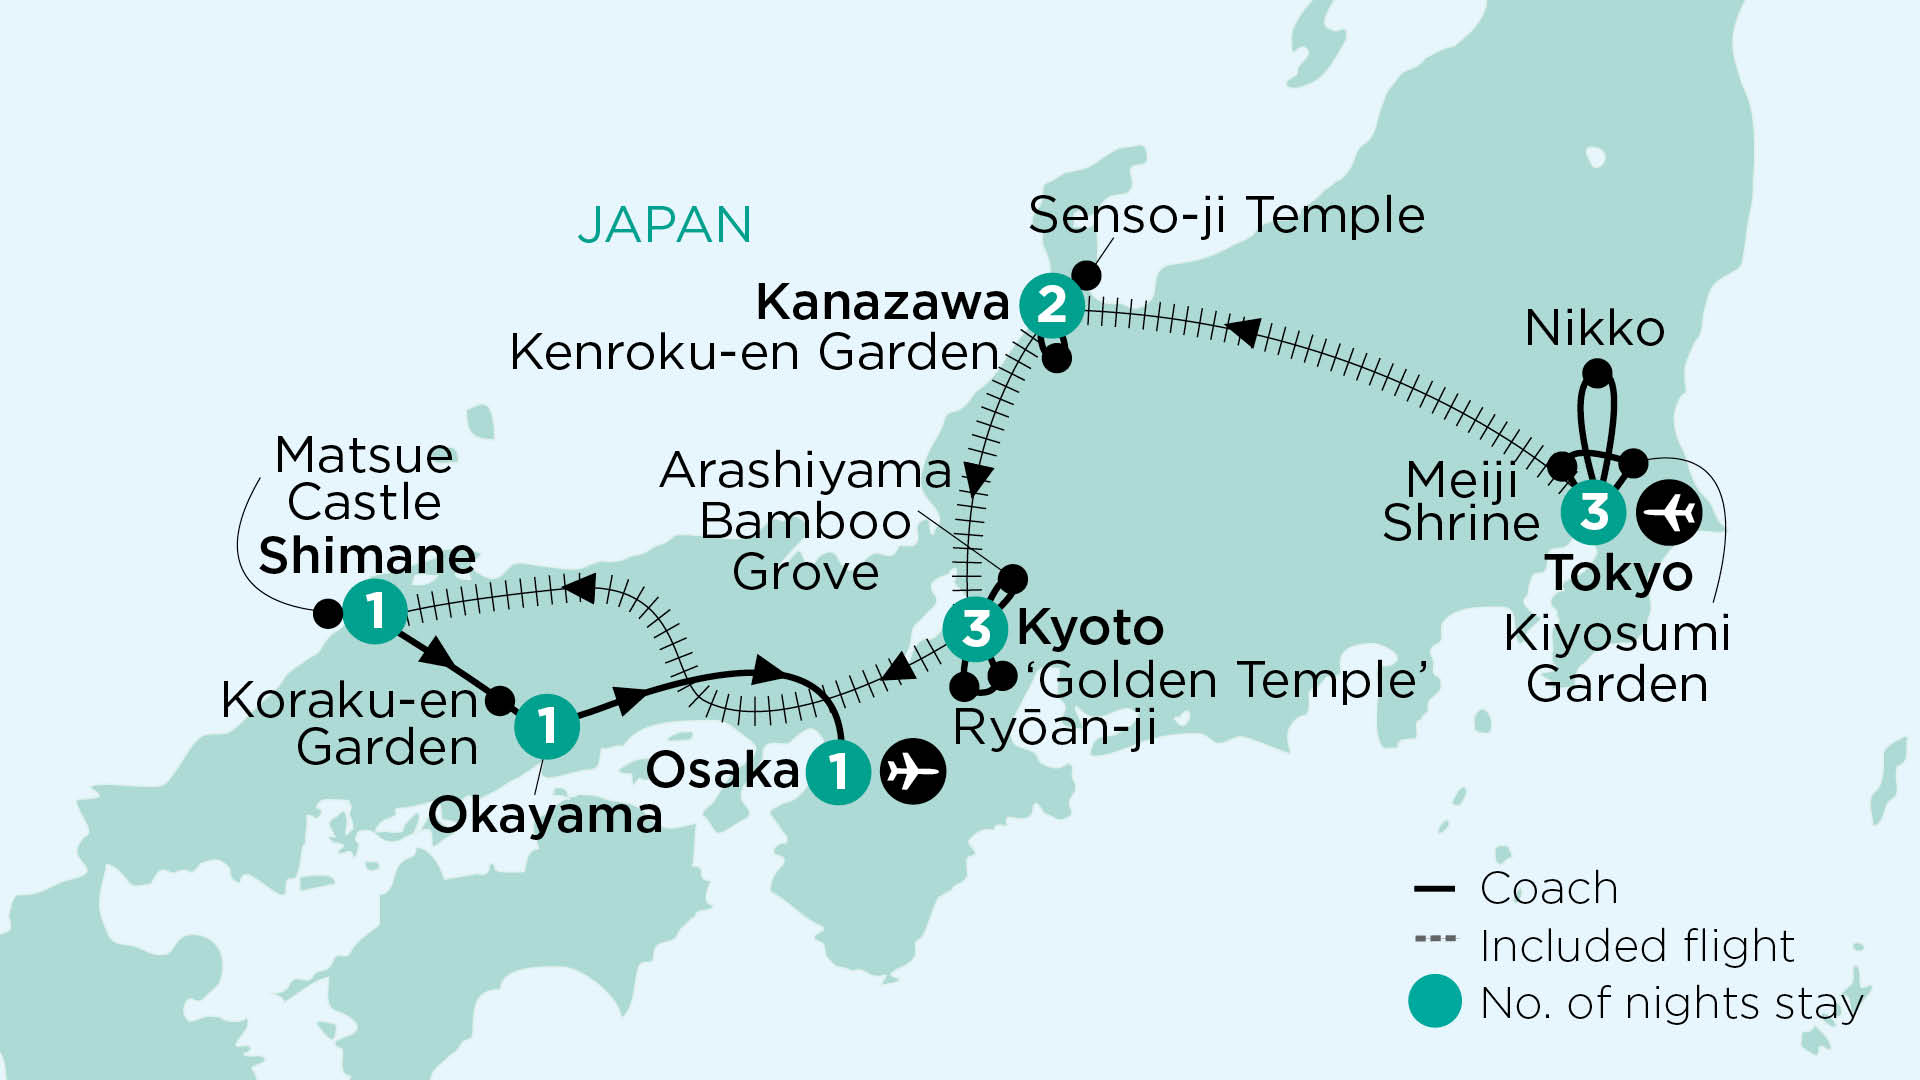 Map of Japan indicating all stops along this itinerary. 